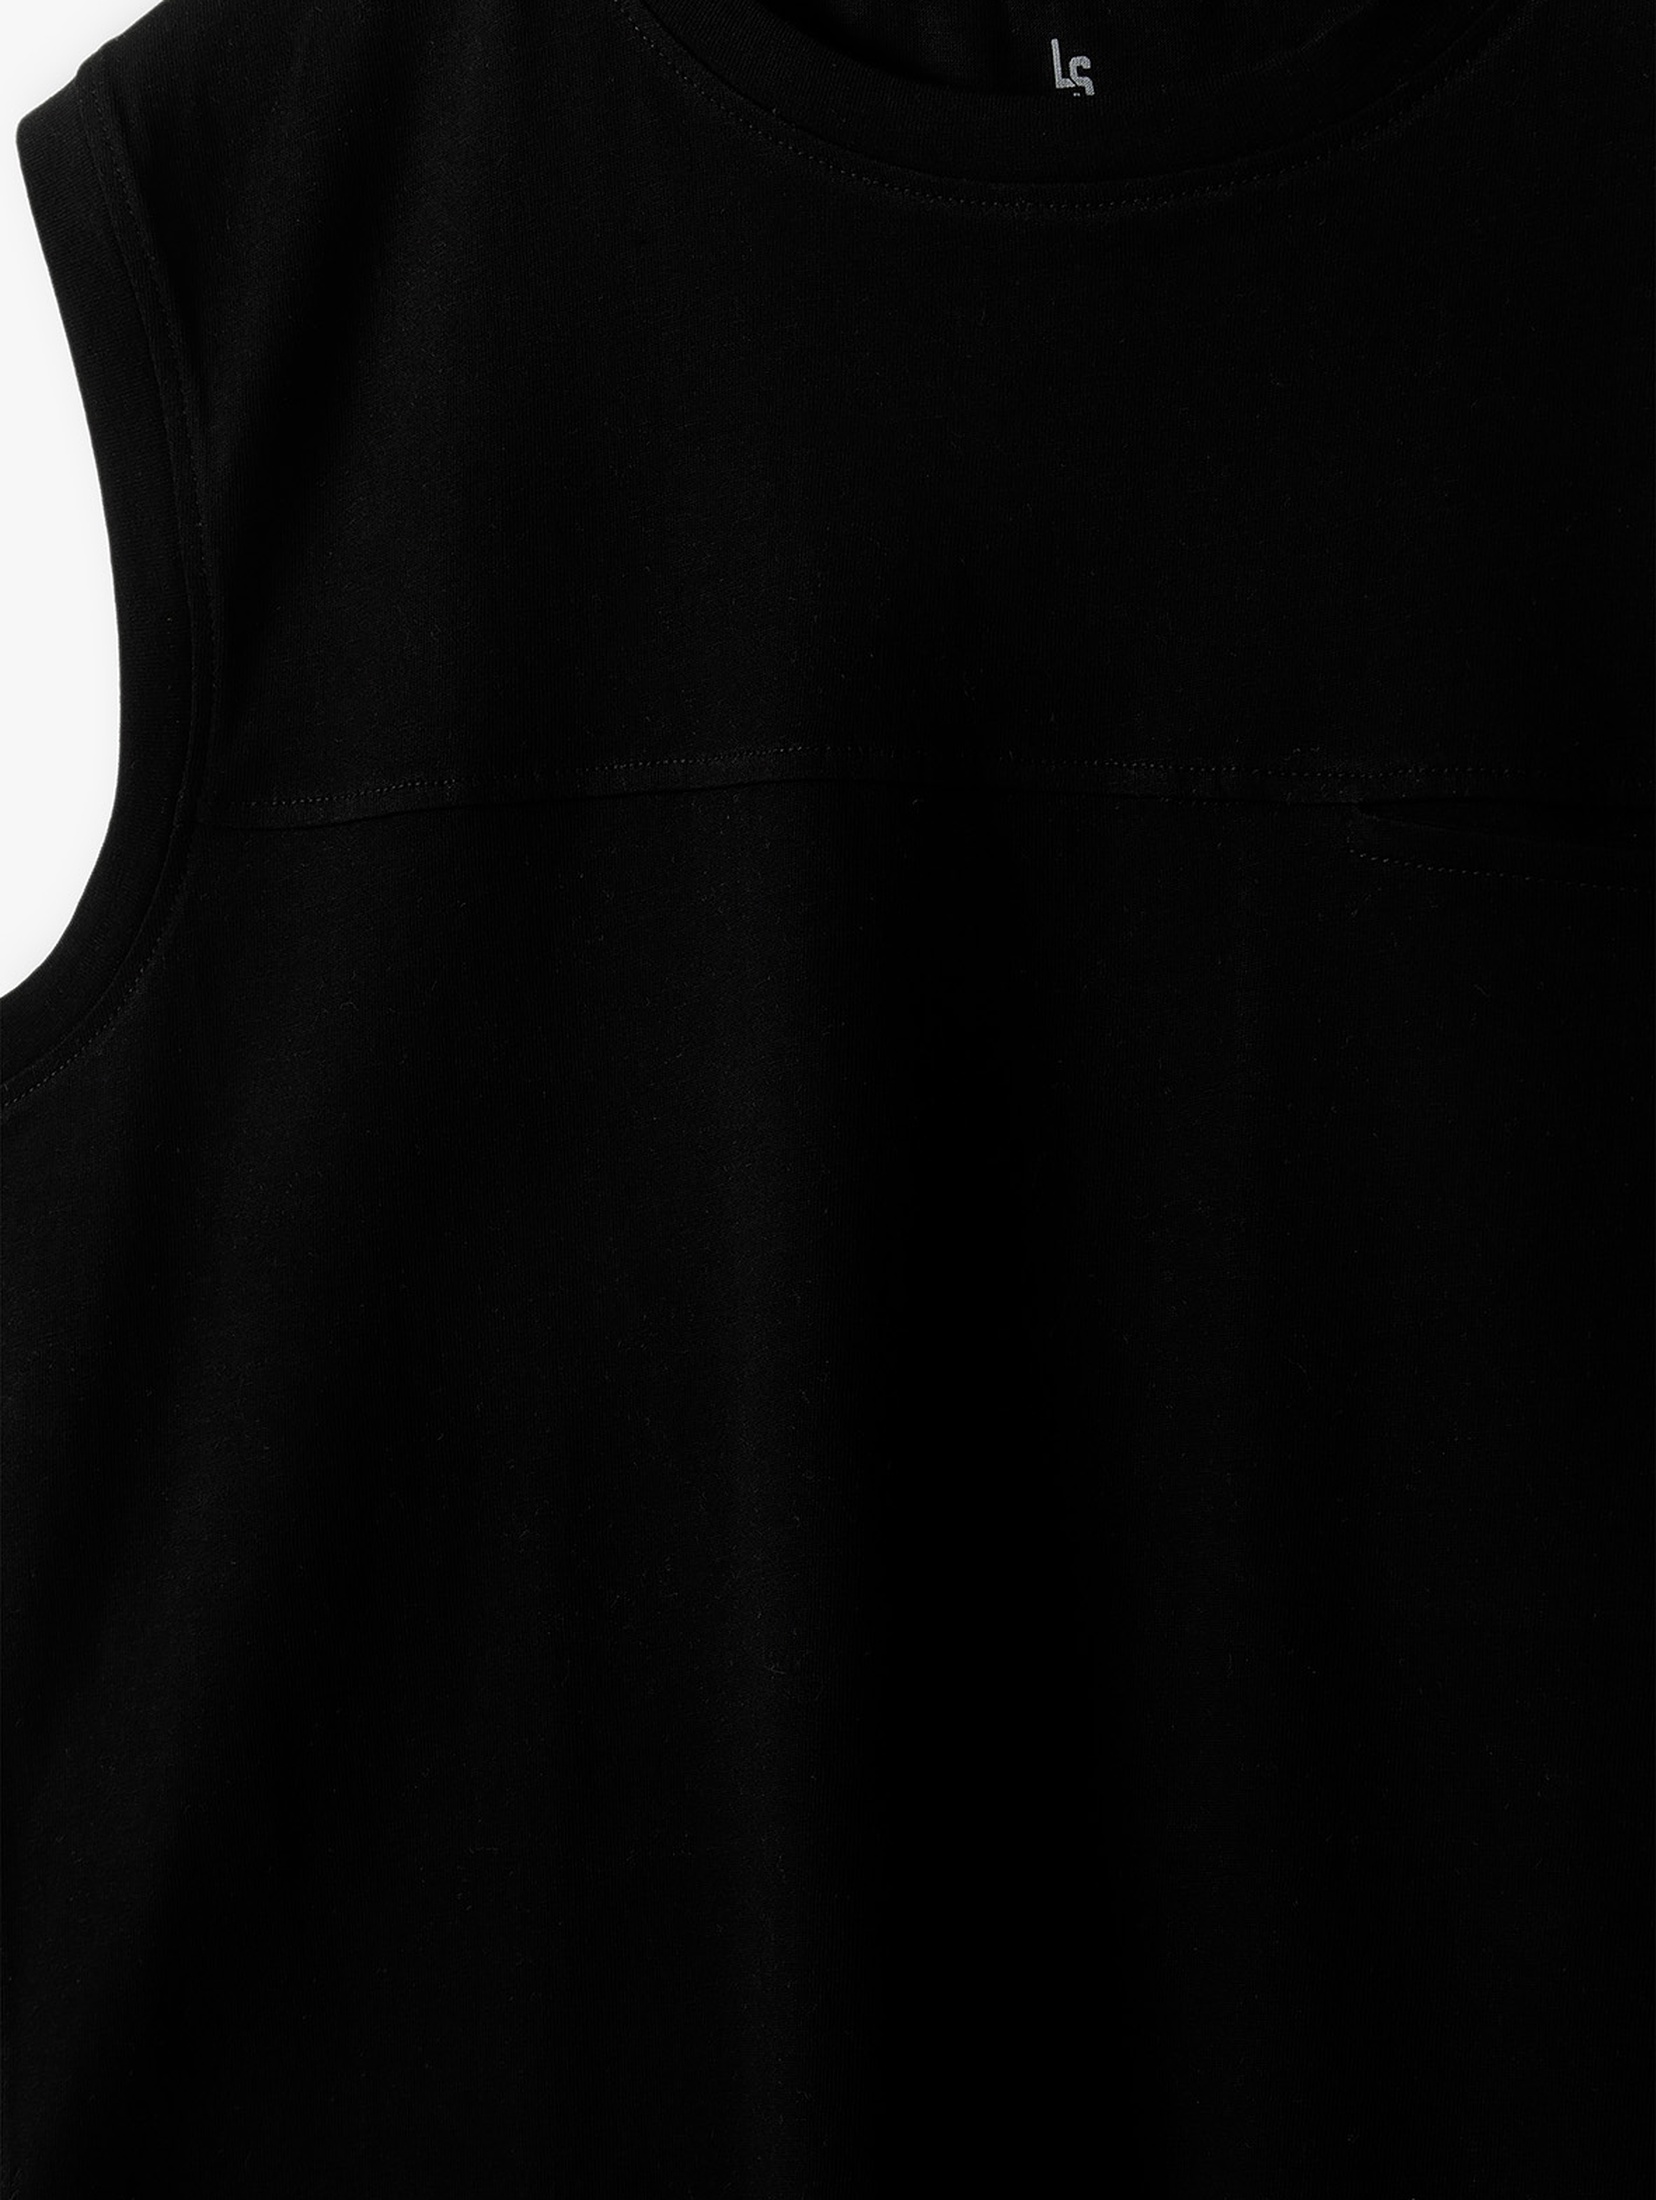 Czarna koszulka na ramiączka - Lincoln&Sharks